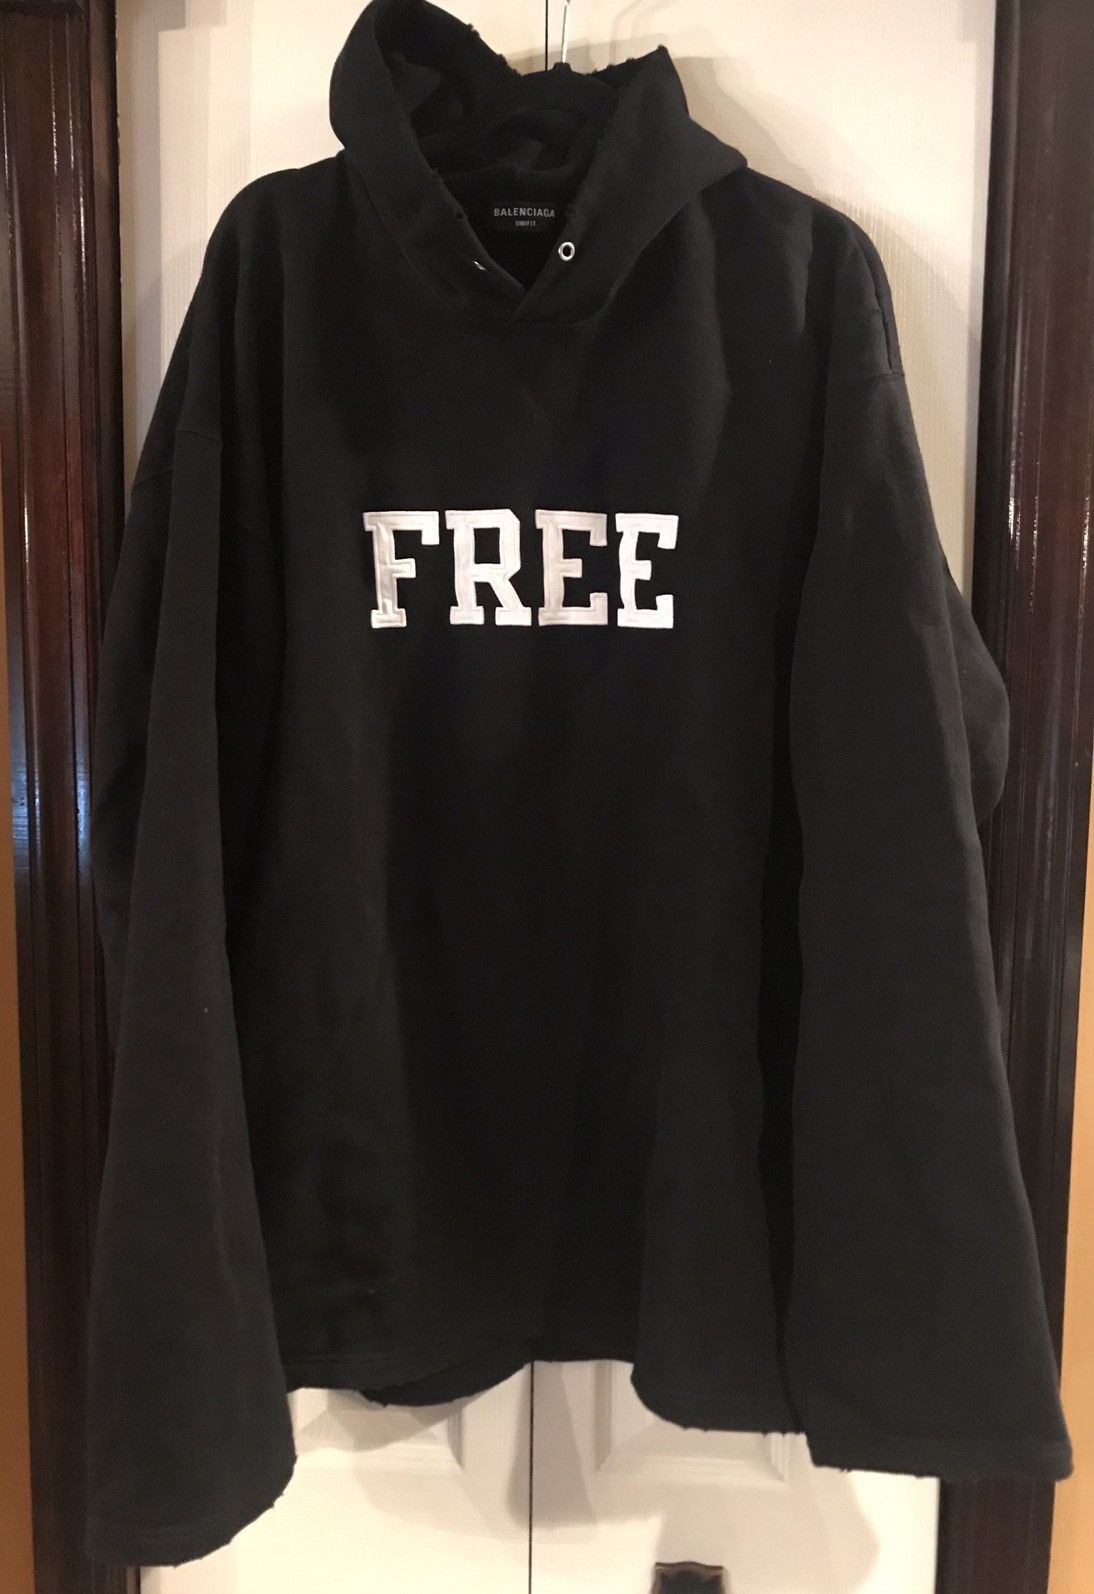 Balenciaga Balenciaga “Free” unifit hoodie | Grailed